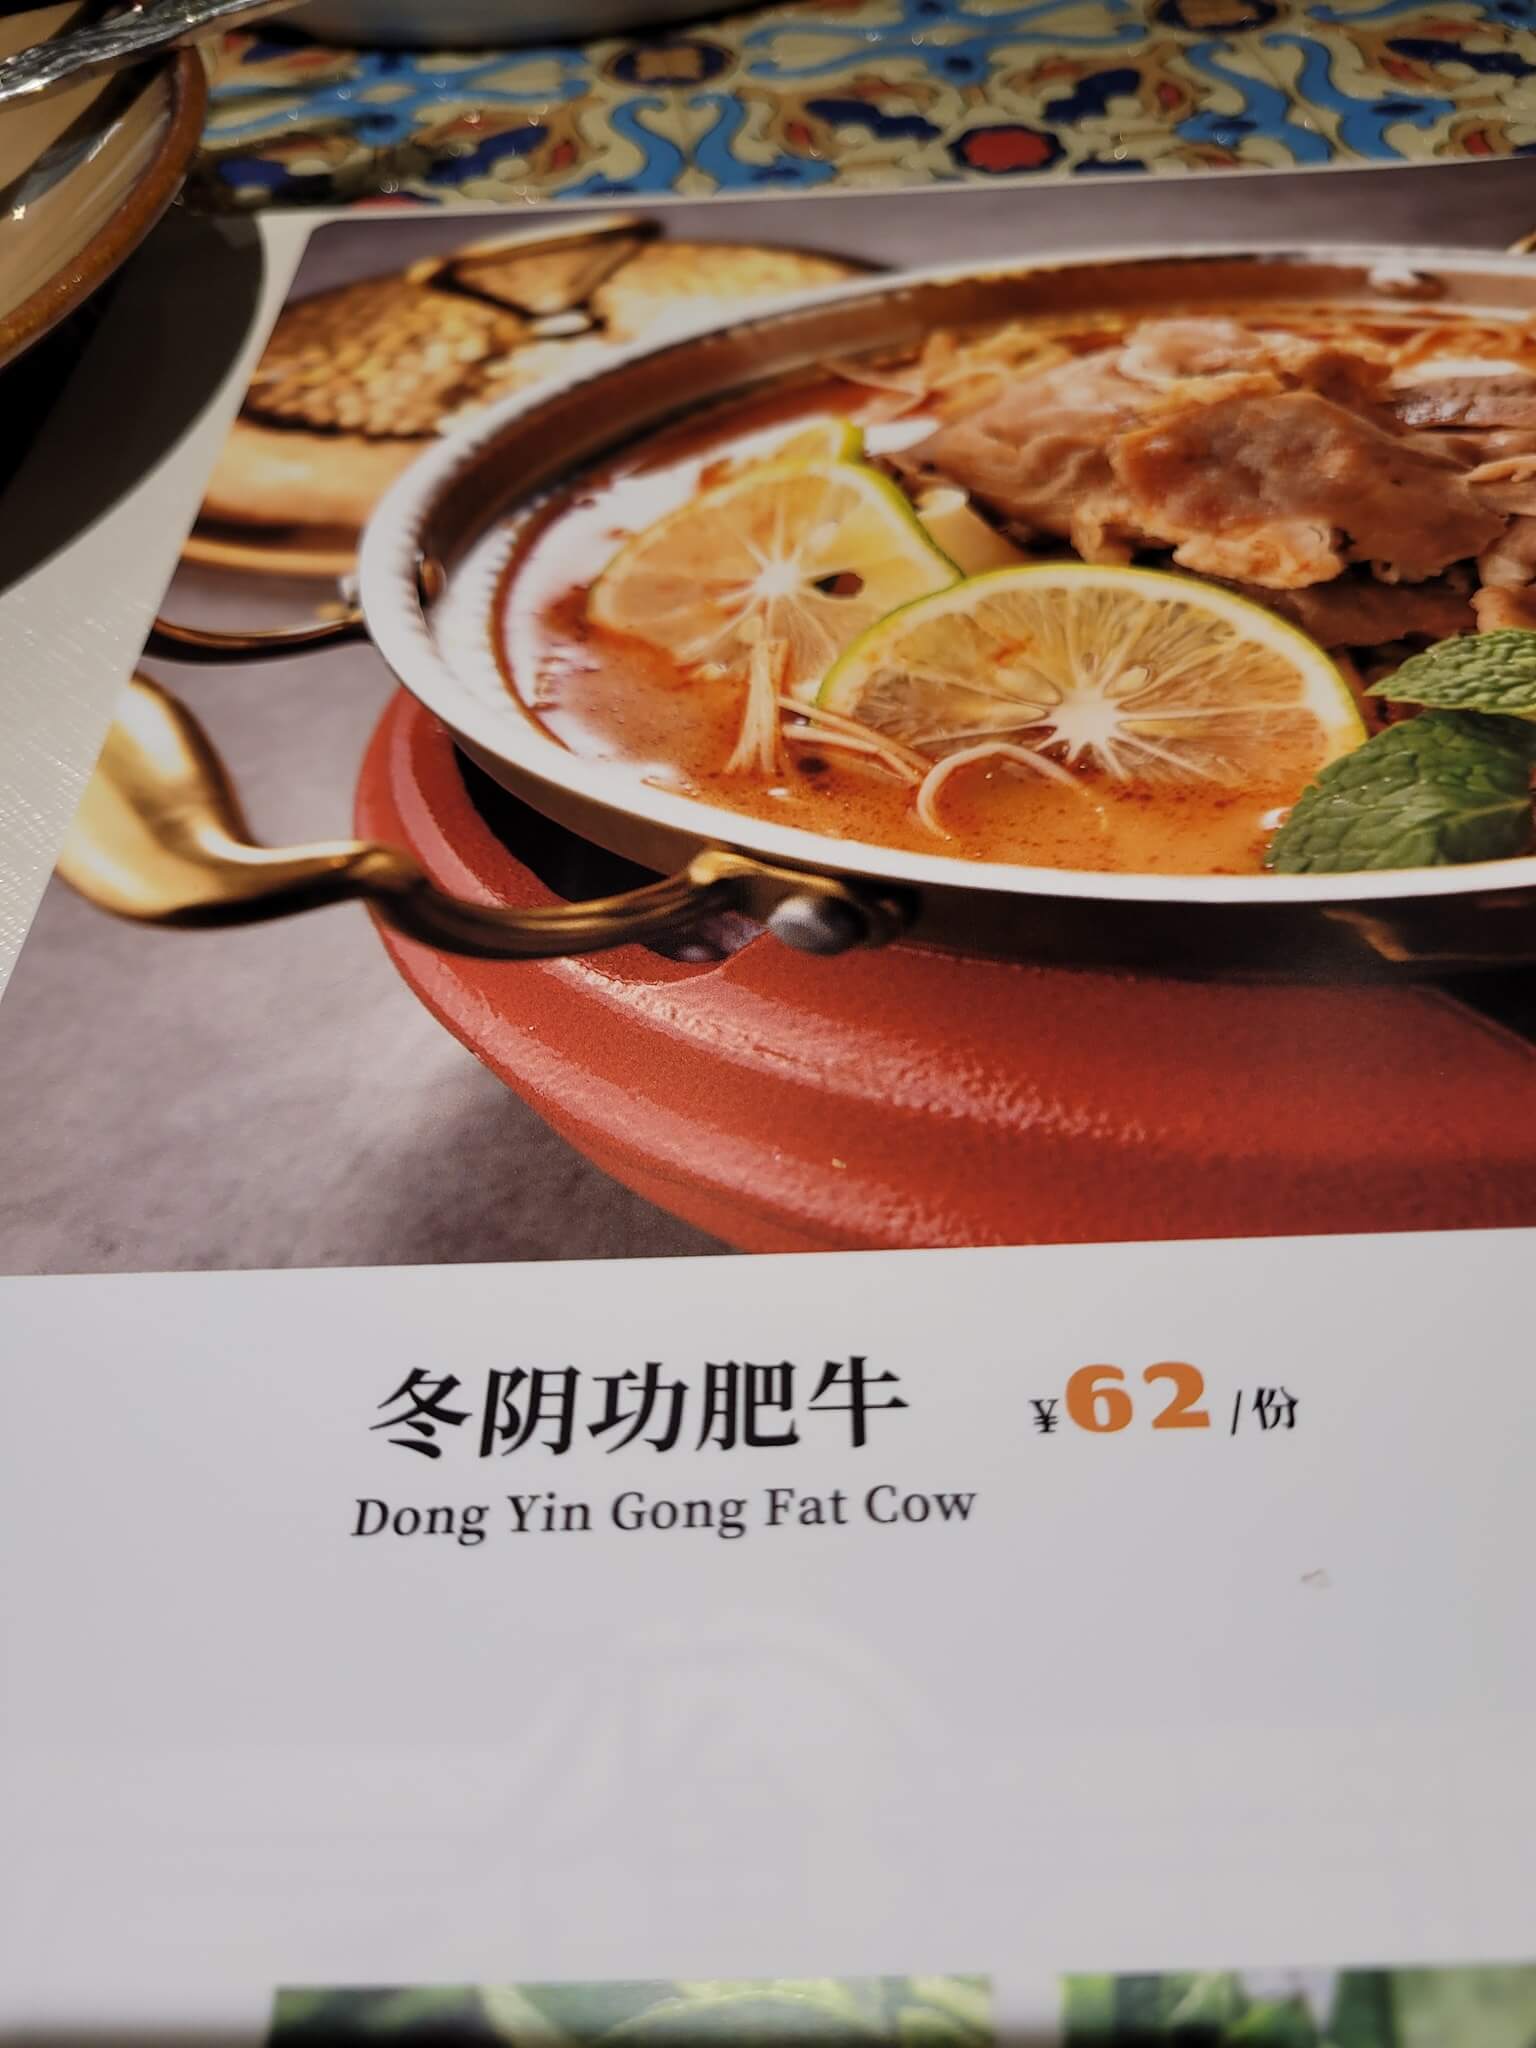 awful-english-translations-in-chinese-restaurant-menu-tomyam